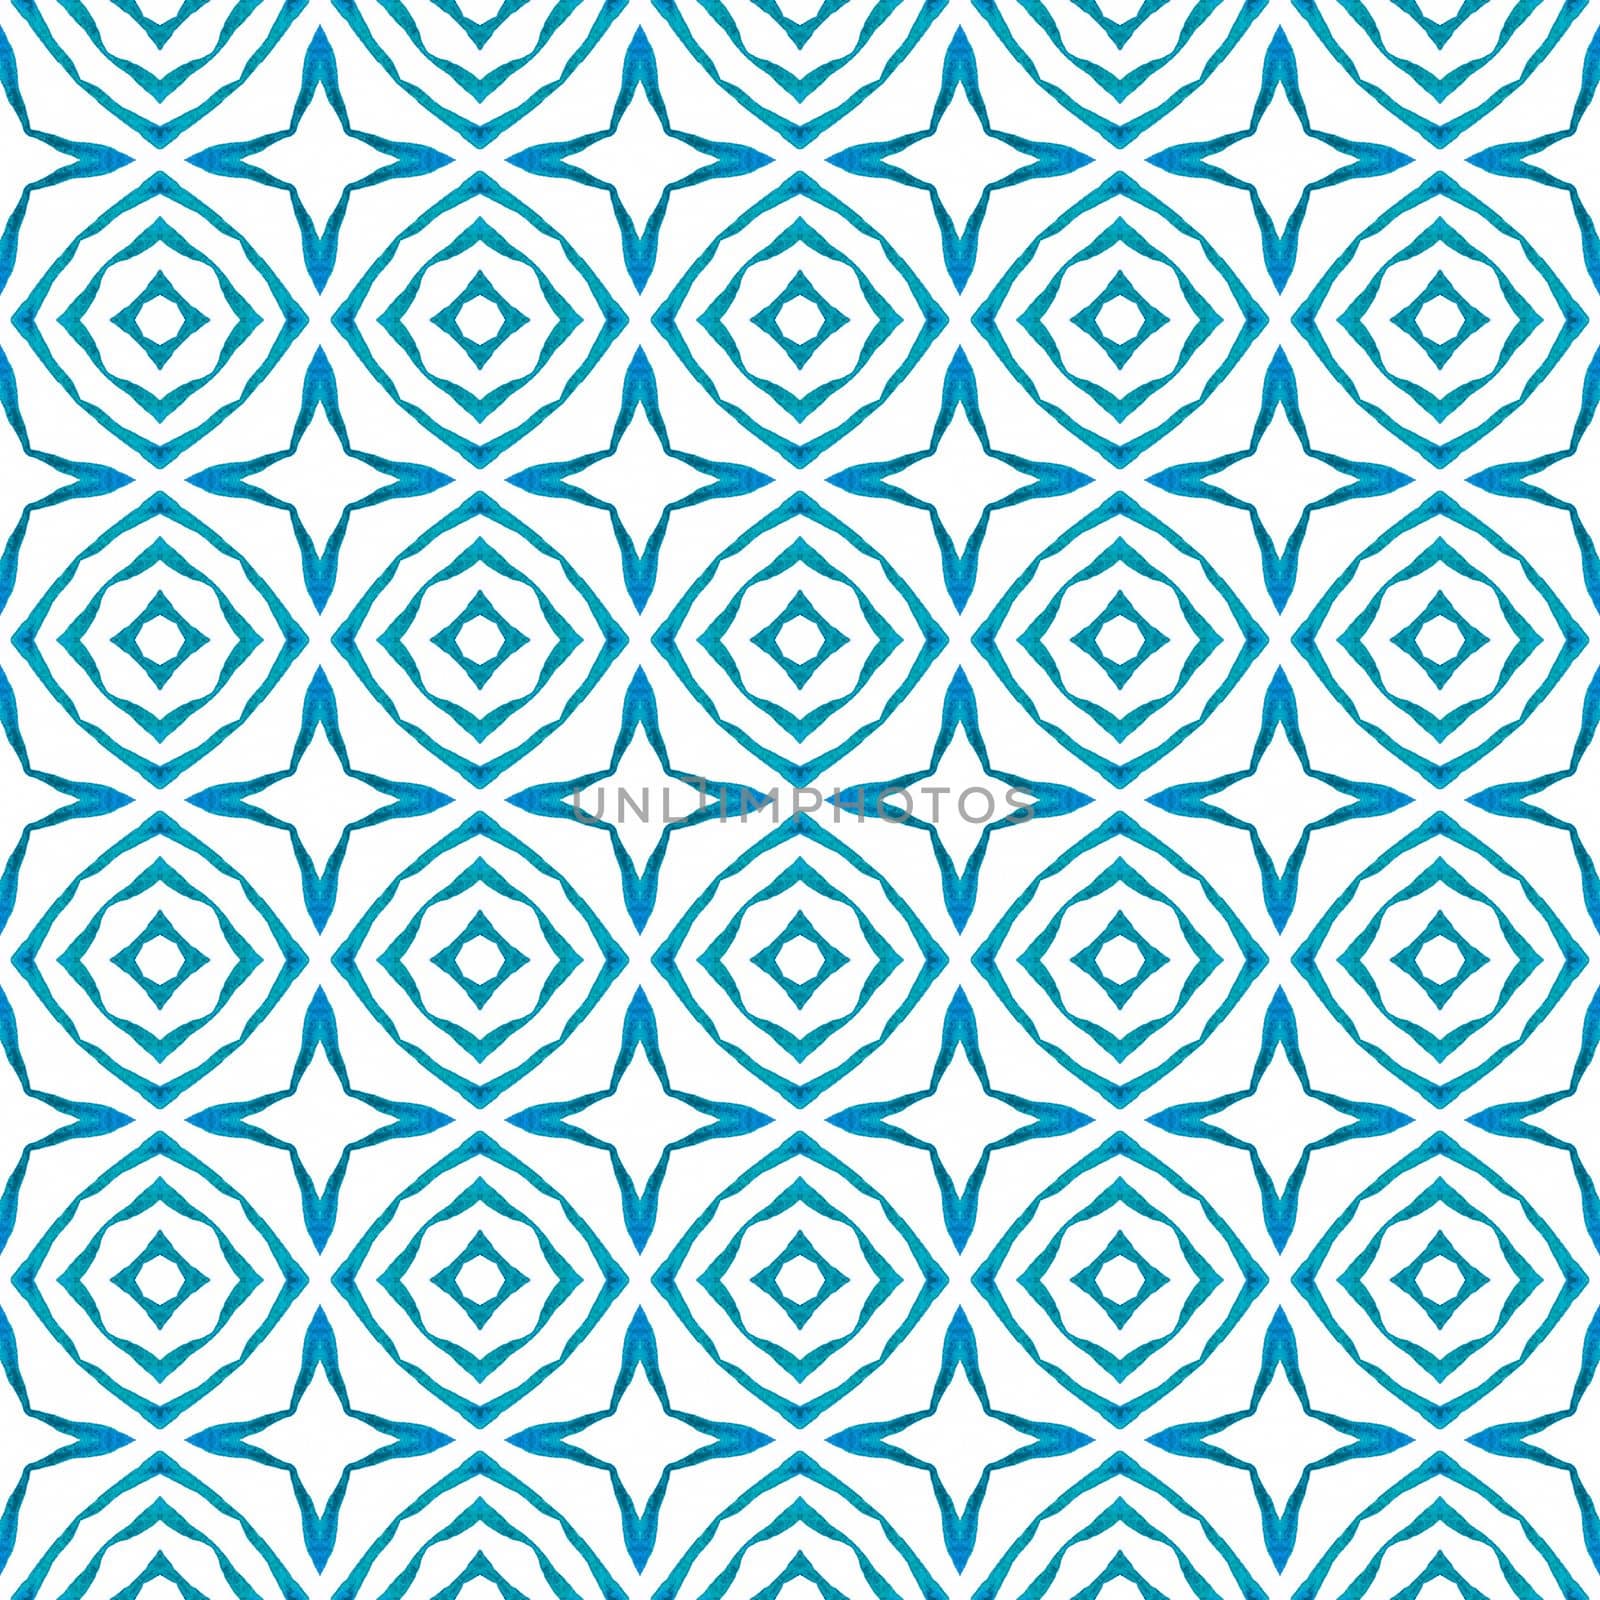 Medallion seamless pattern. Blue impressive boho chic summer design. Watercolor medallion seamless border. Textile ready pleasant print, swimwear fabric, wallpaper, wrapping.